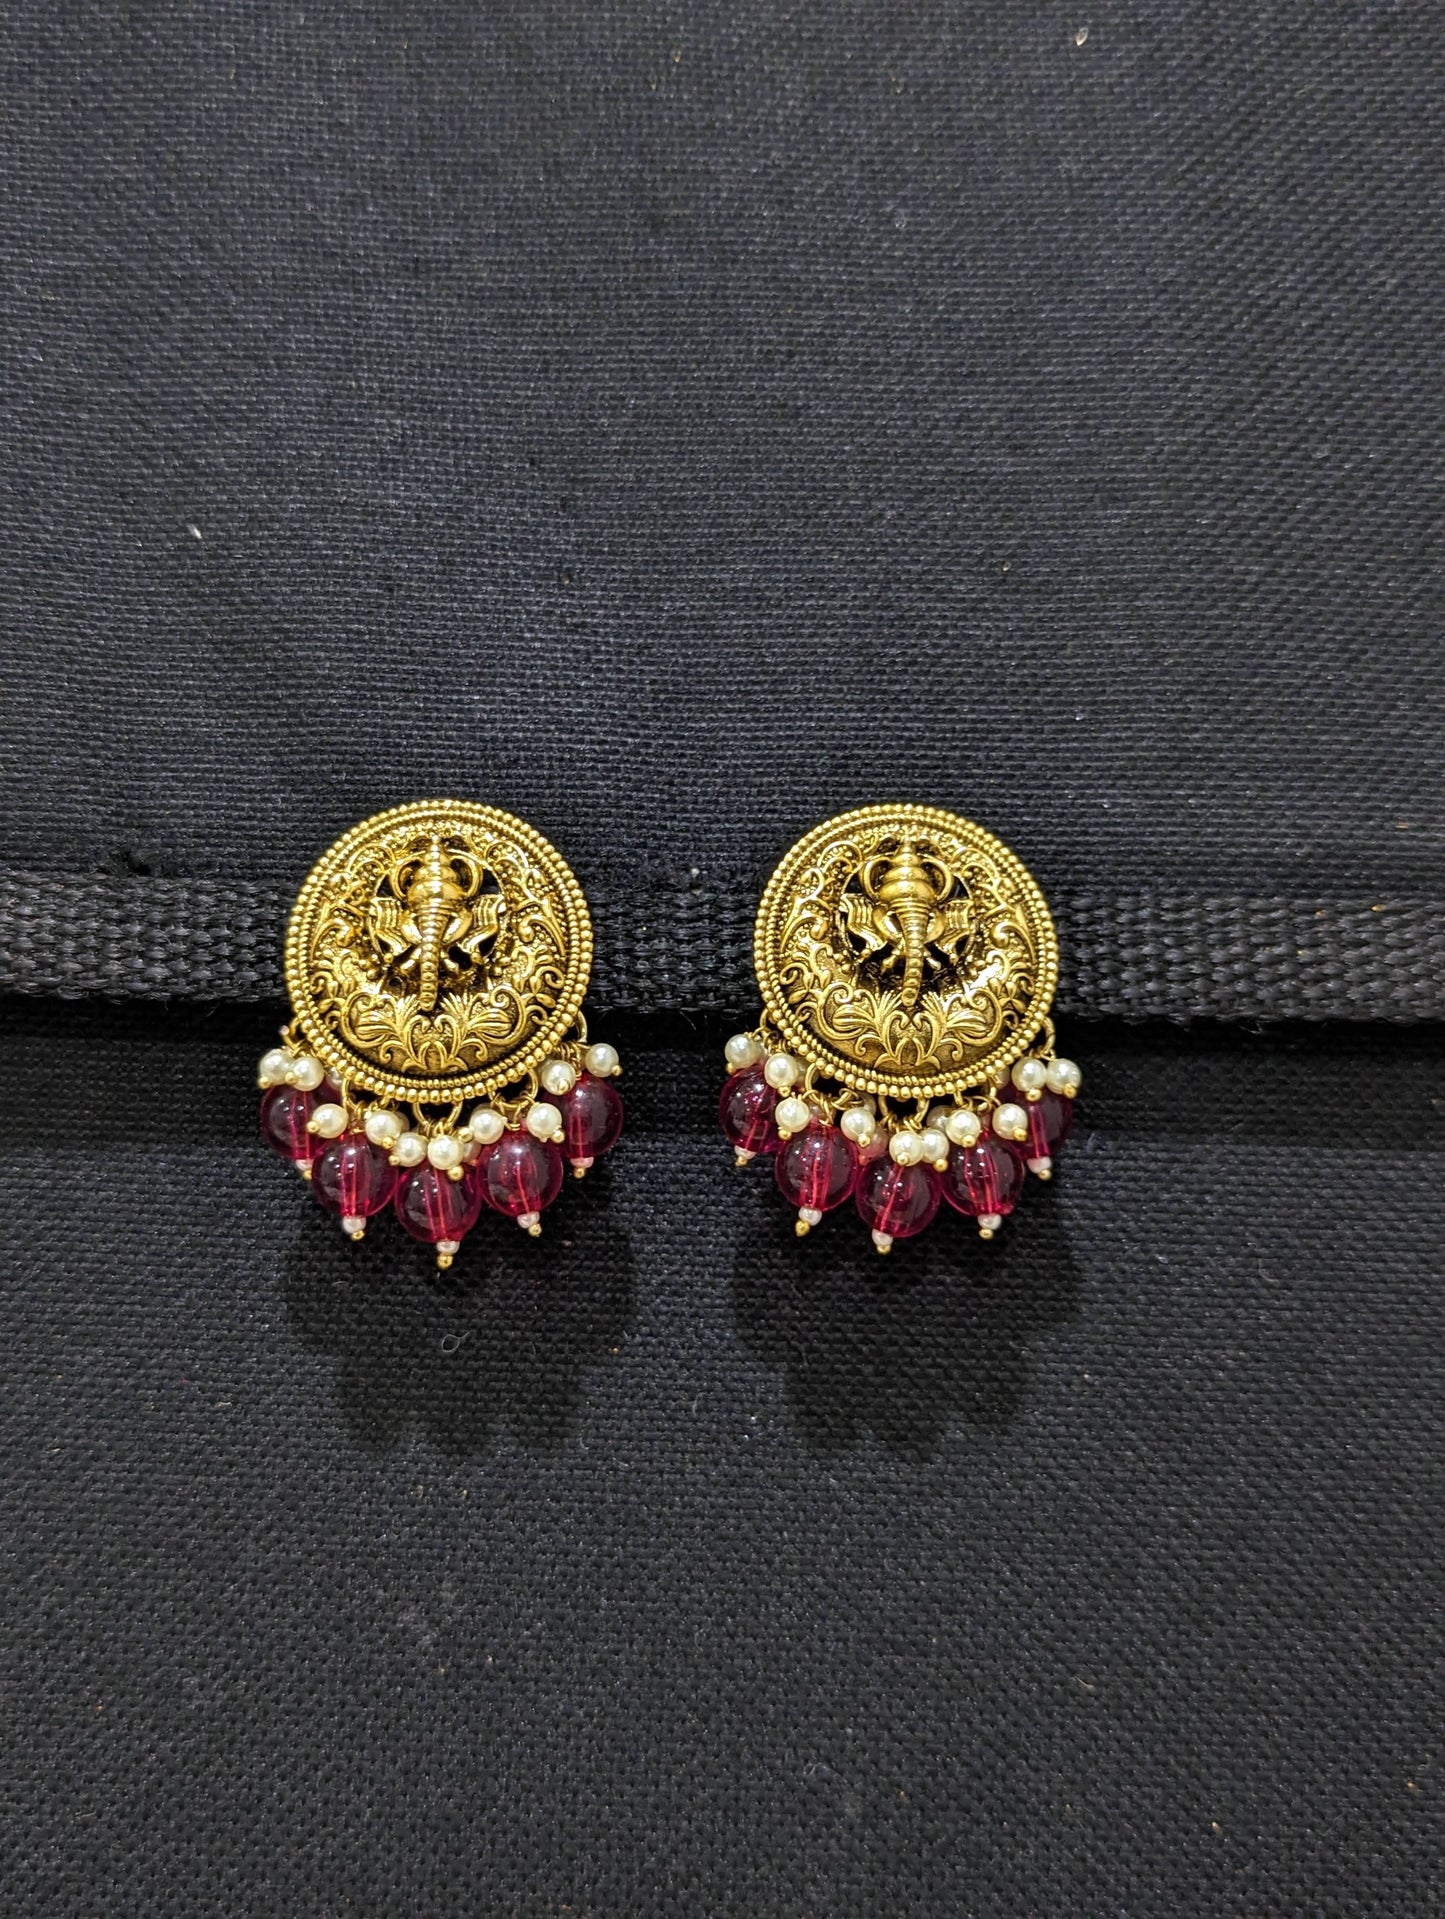 Ganesh ji Antique gold plated stud earrings